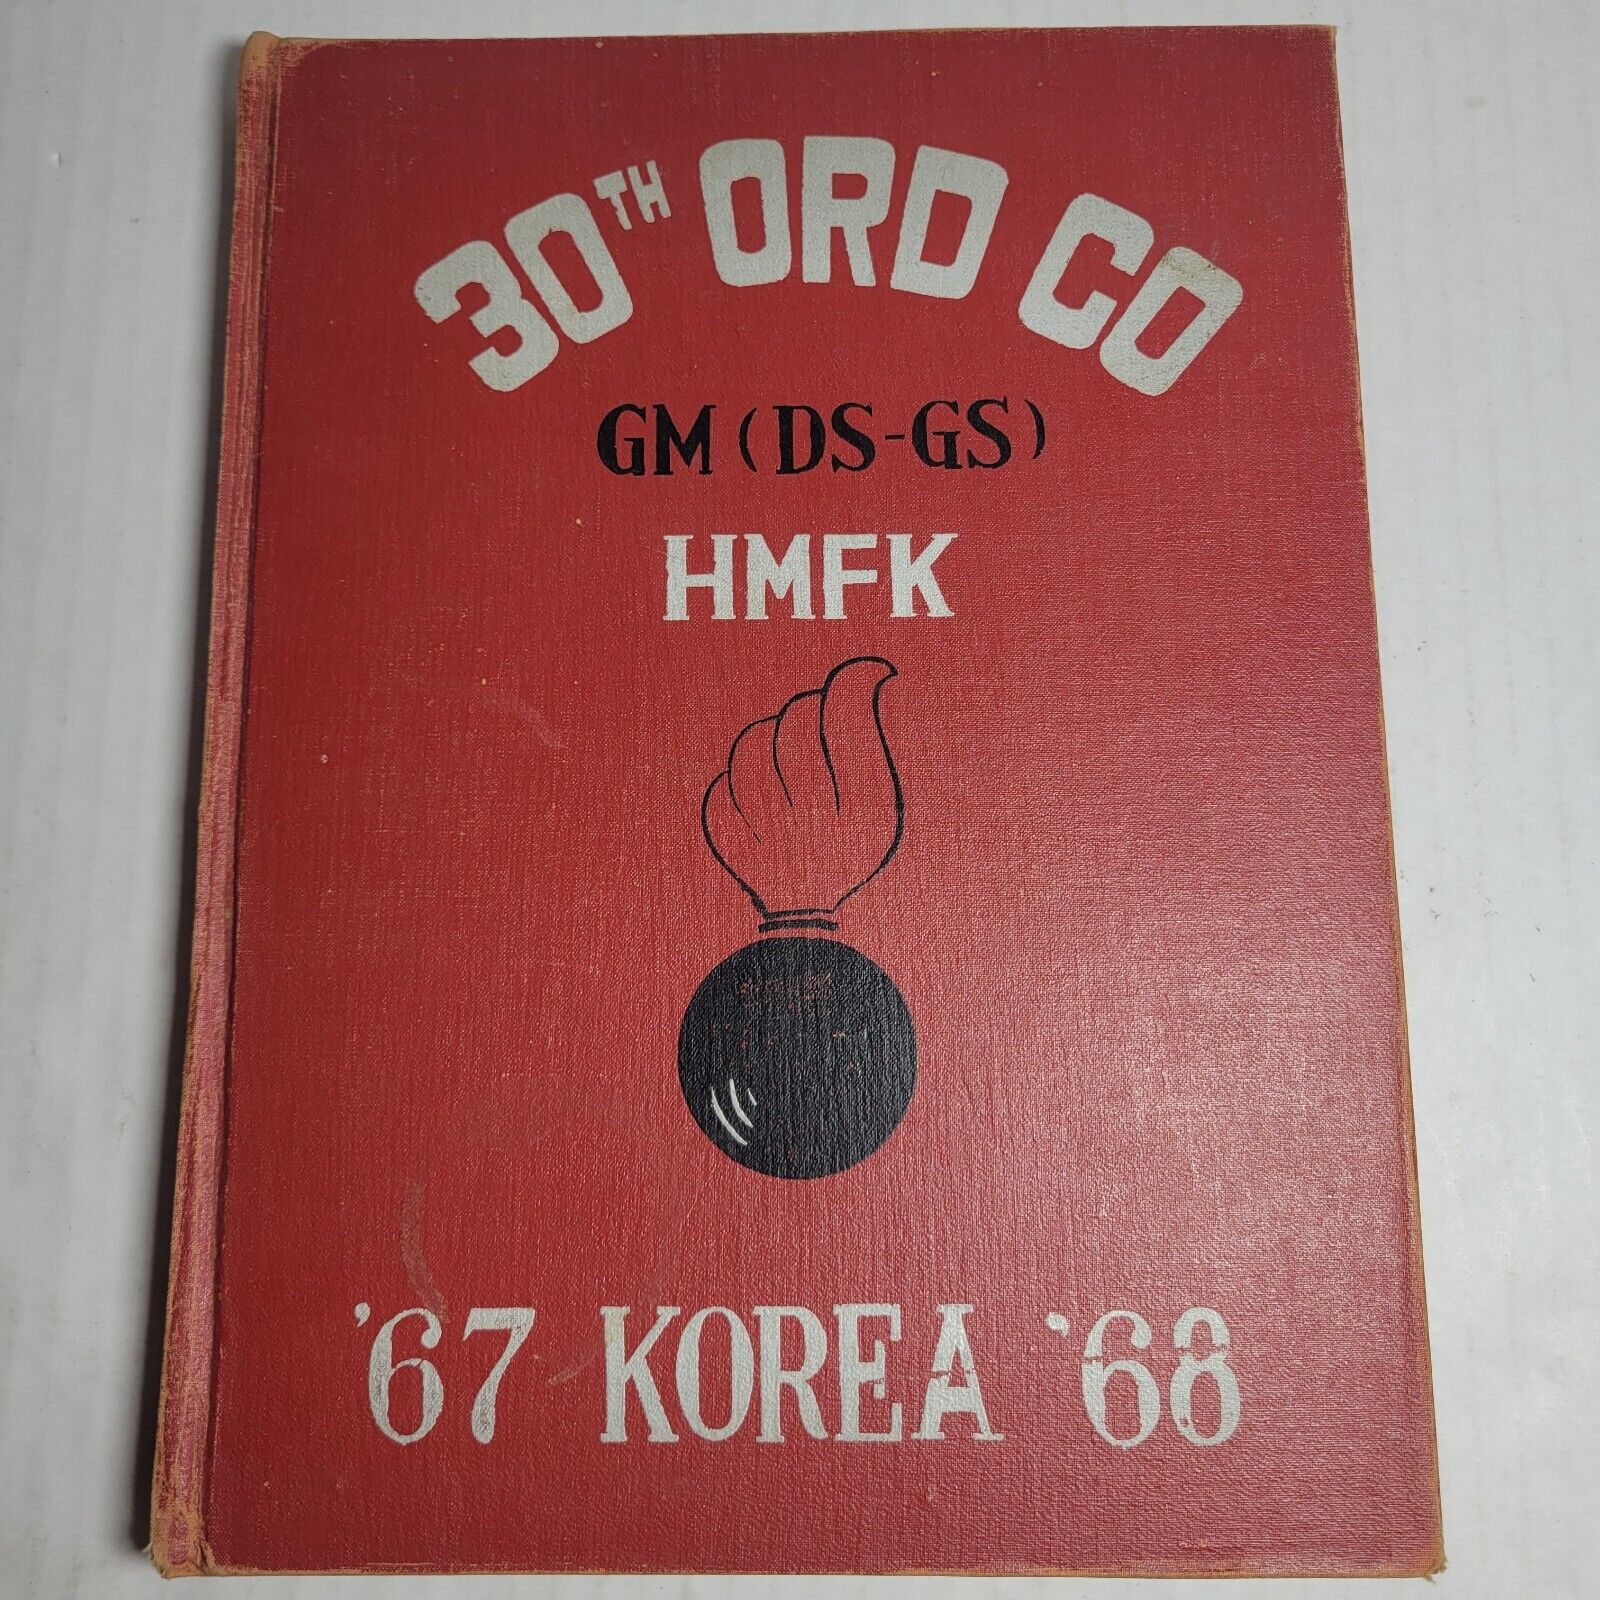 1967-1968 30th Ordnance Company GM (DS-GS) Yearbook Vietnam War